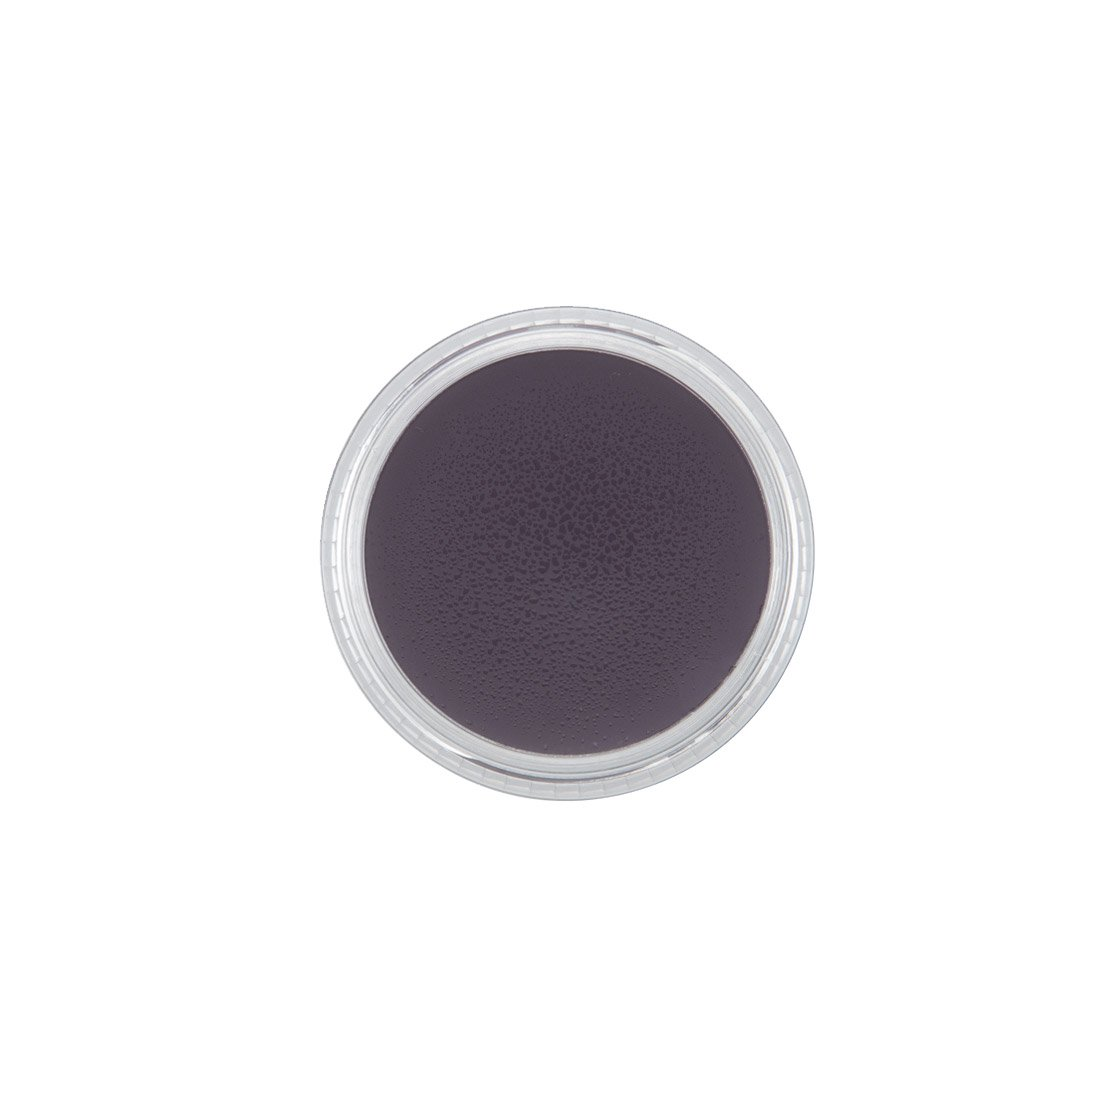 Grey Purple